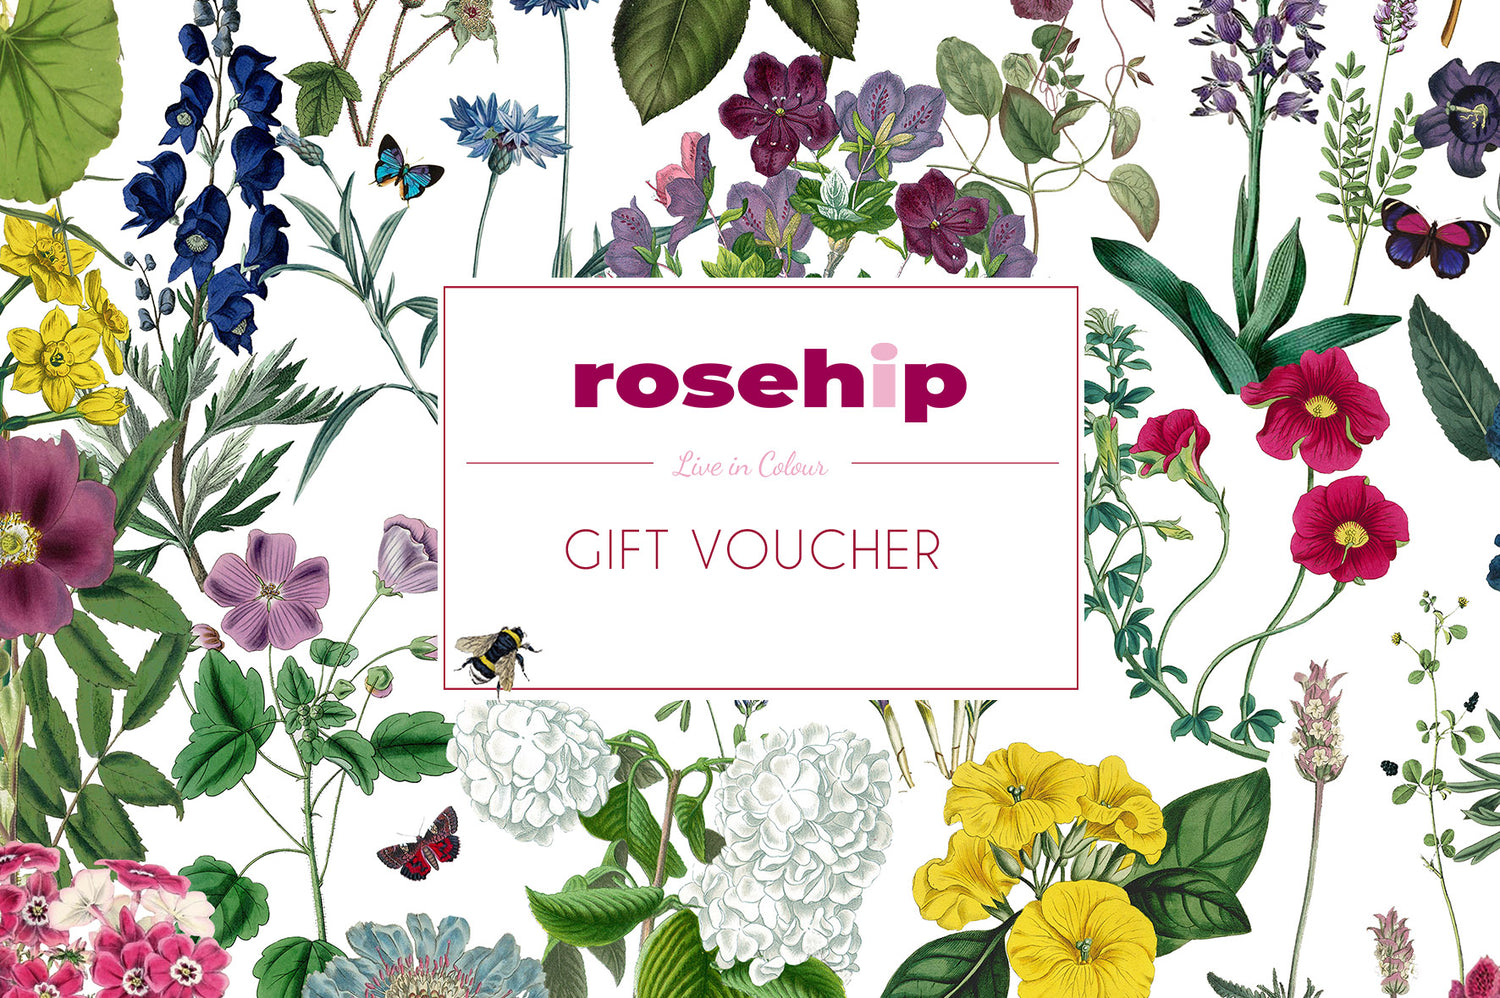 Rosehip Gift Voucher